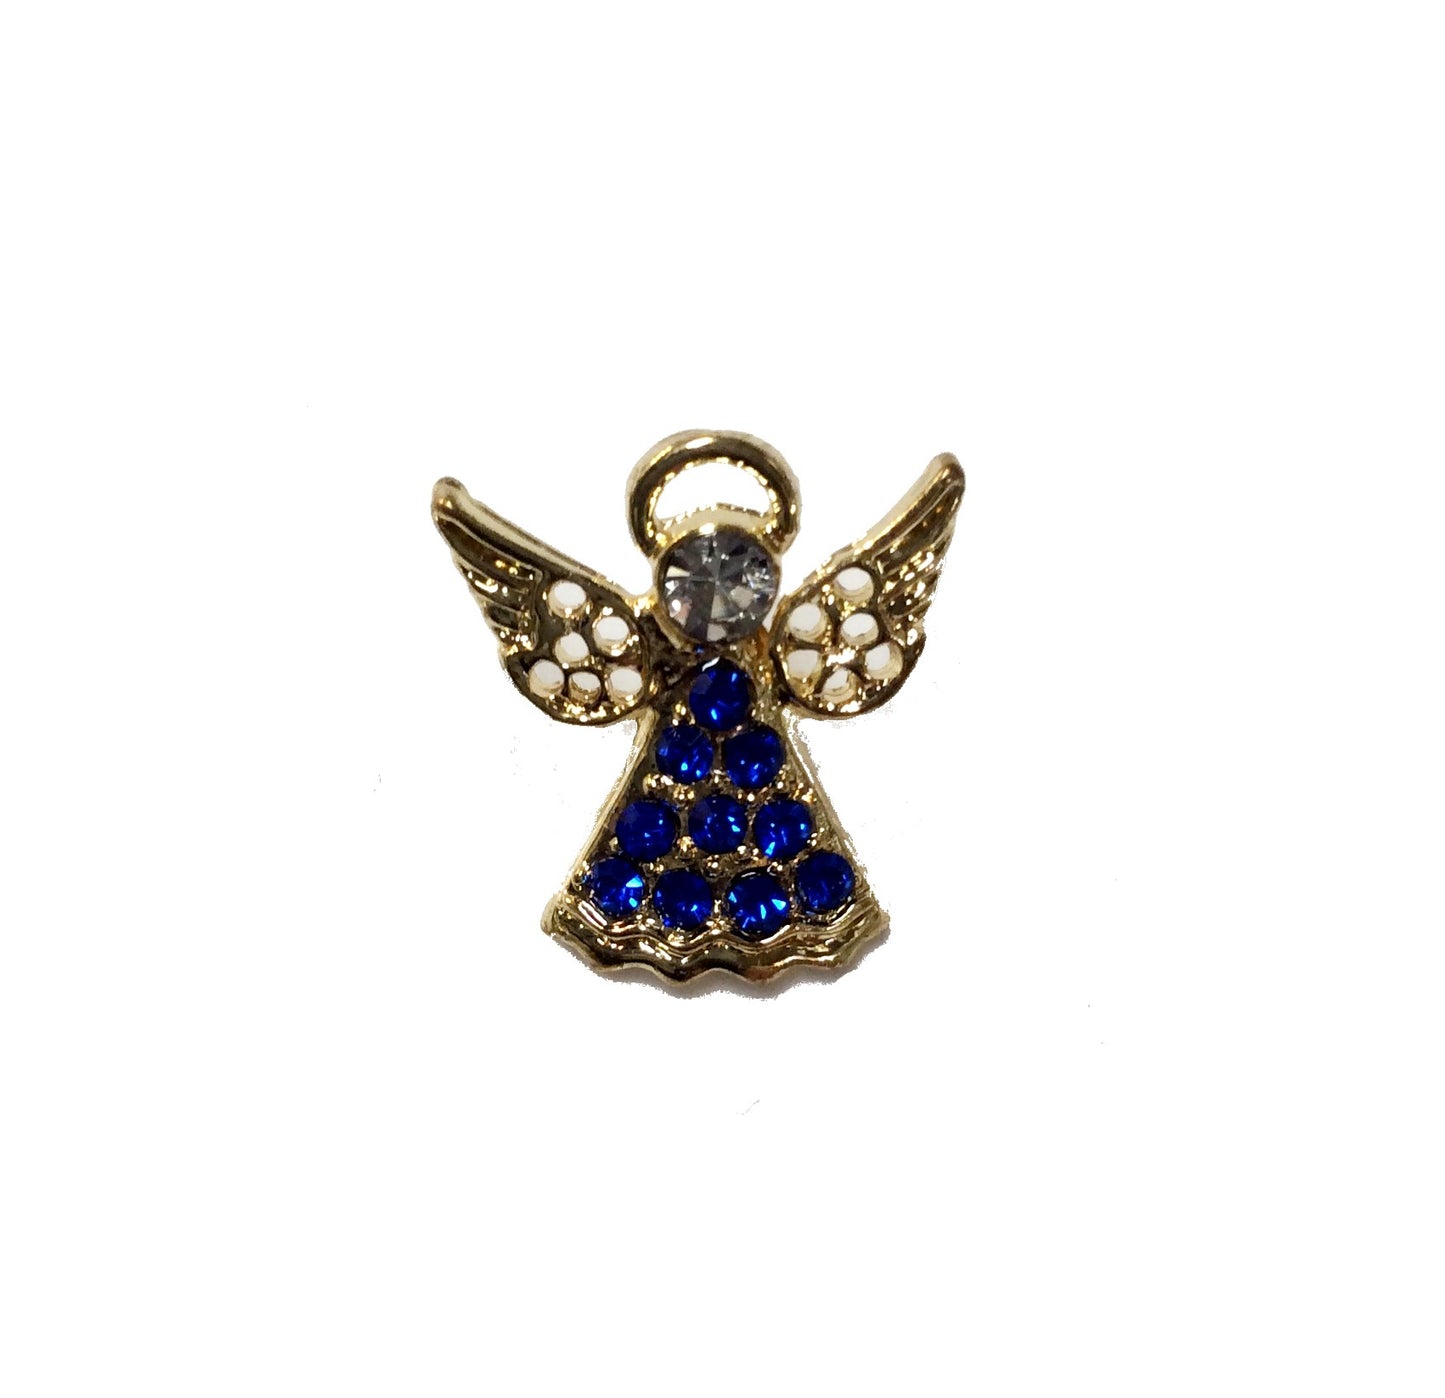 September Guardian Angel Tack Pin (Sapphire)